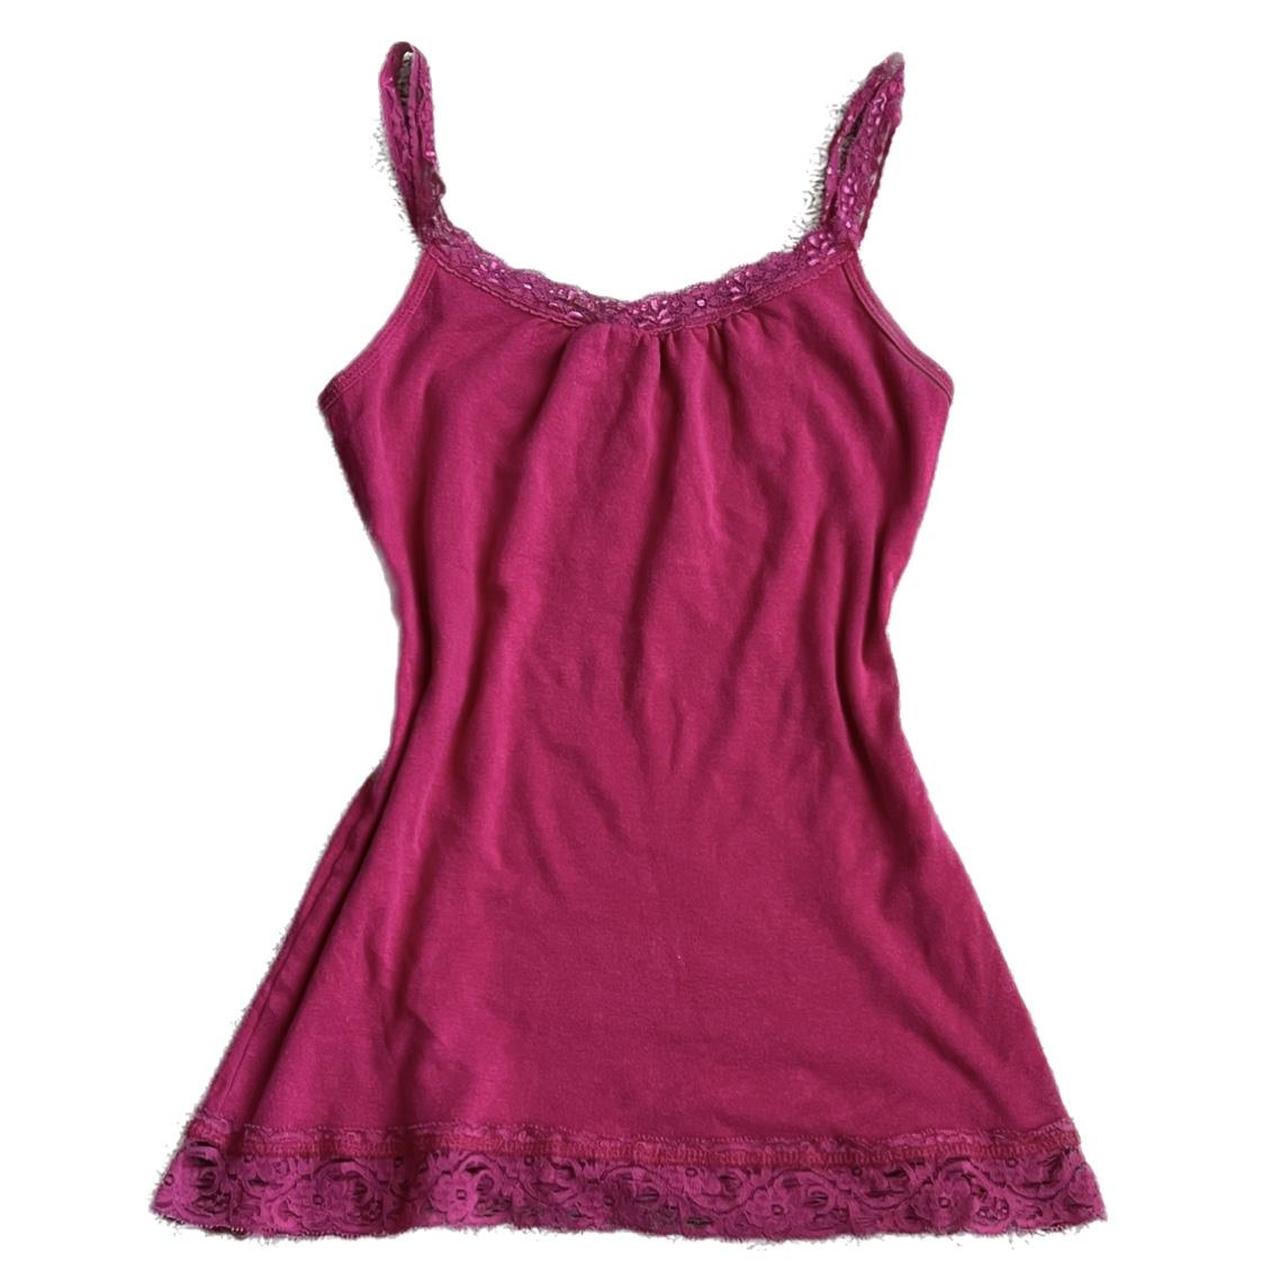 Women's Pink Vests-tanks-camis | Depop